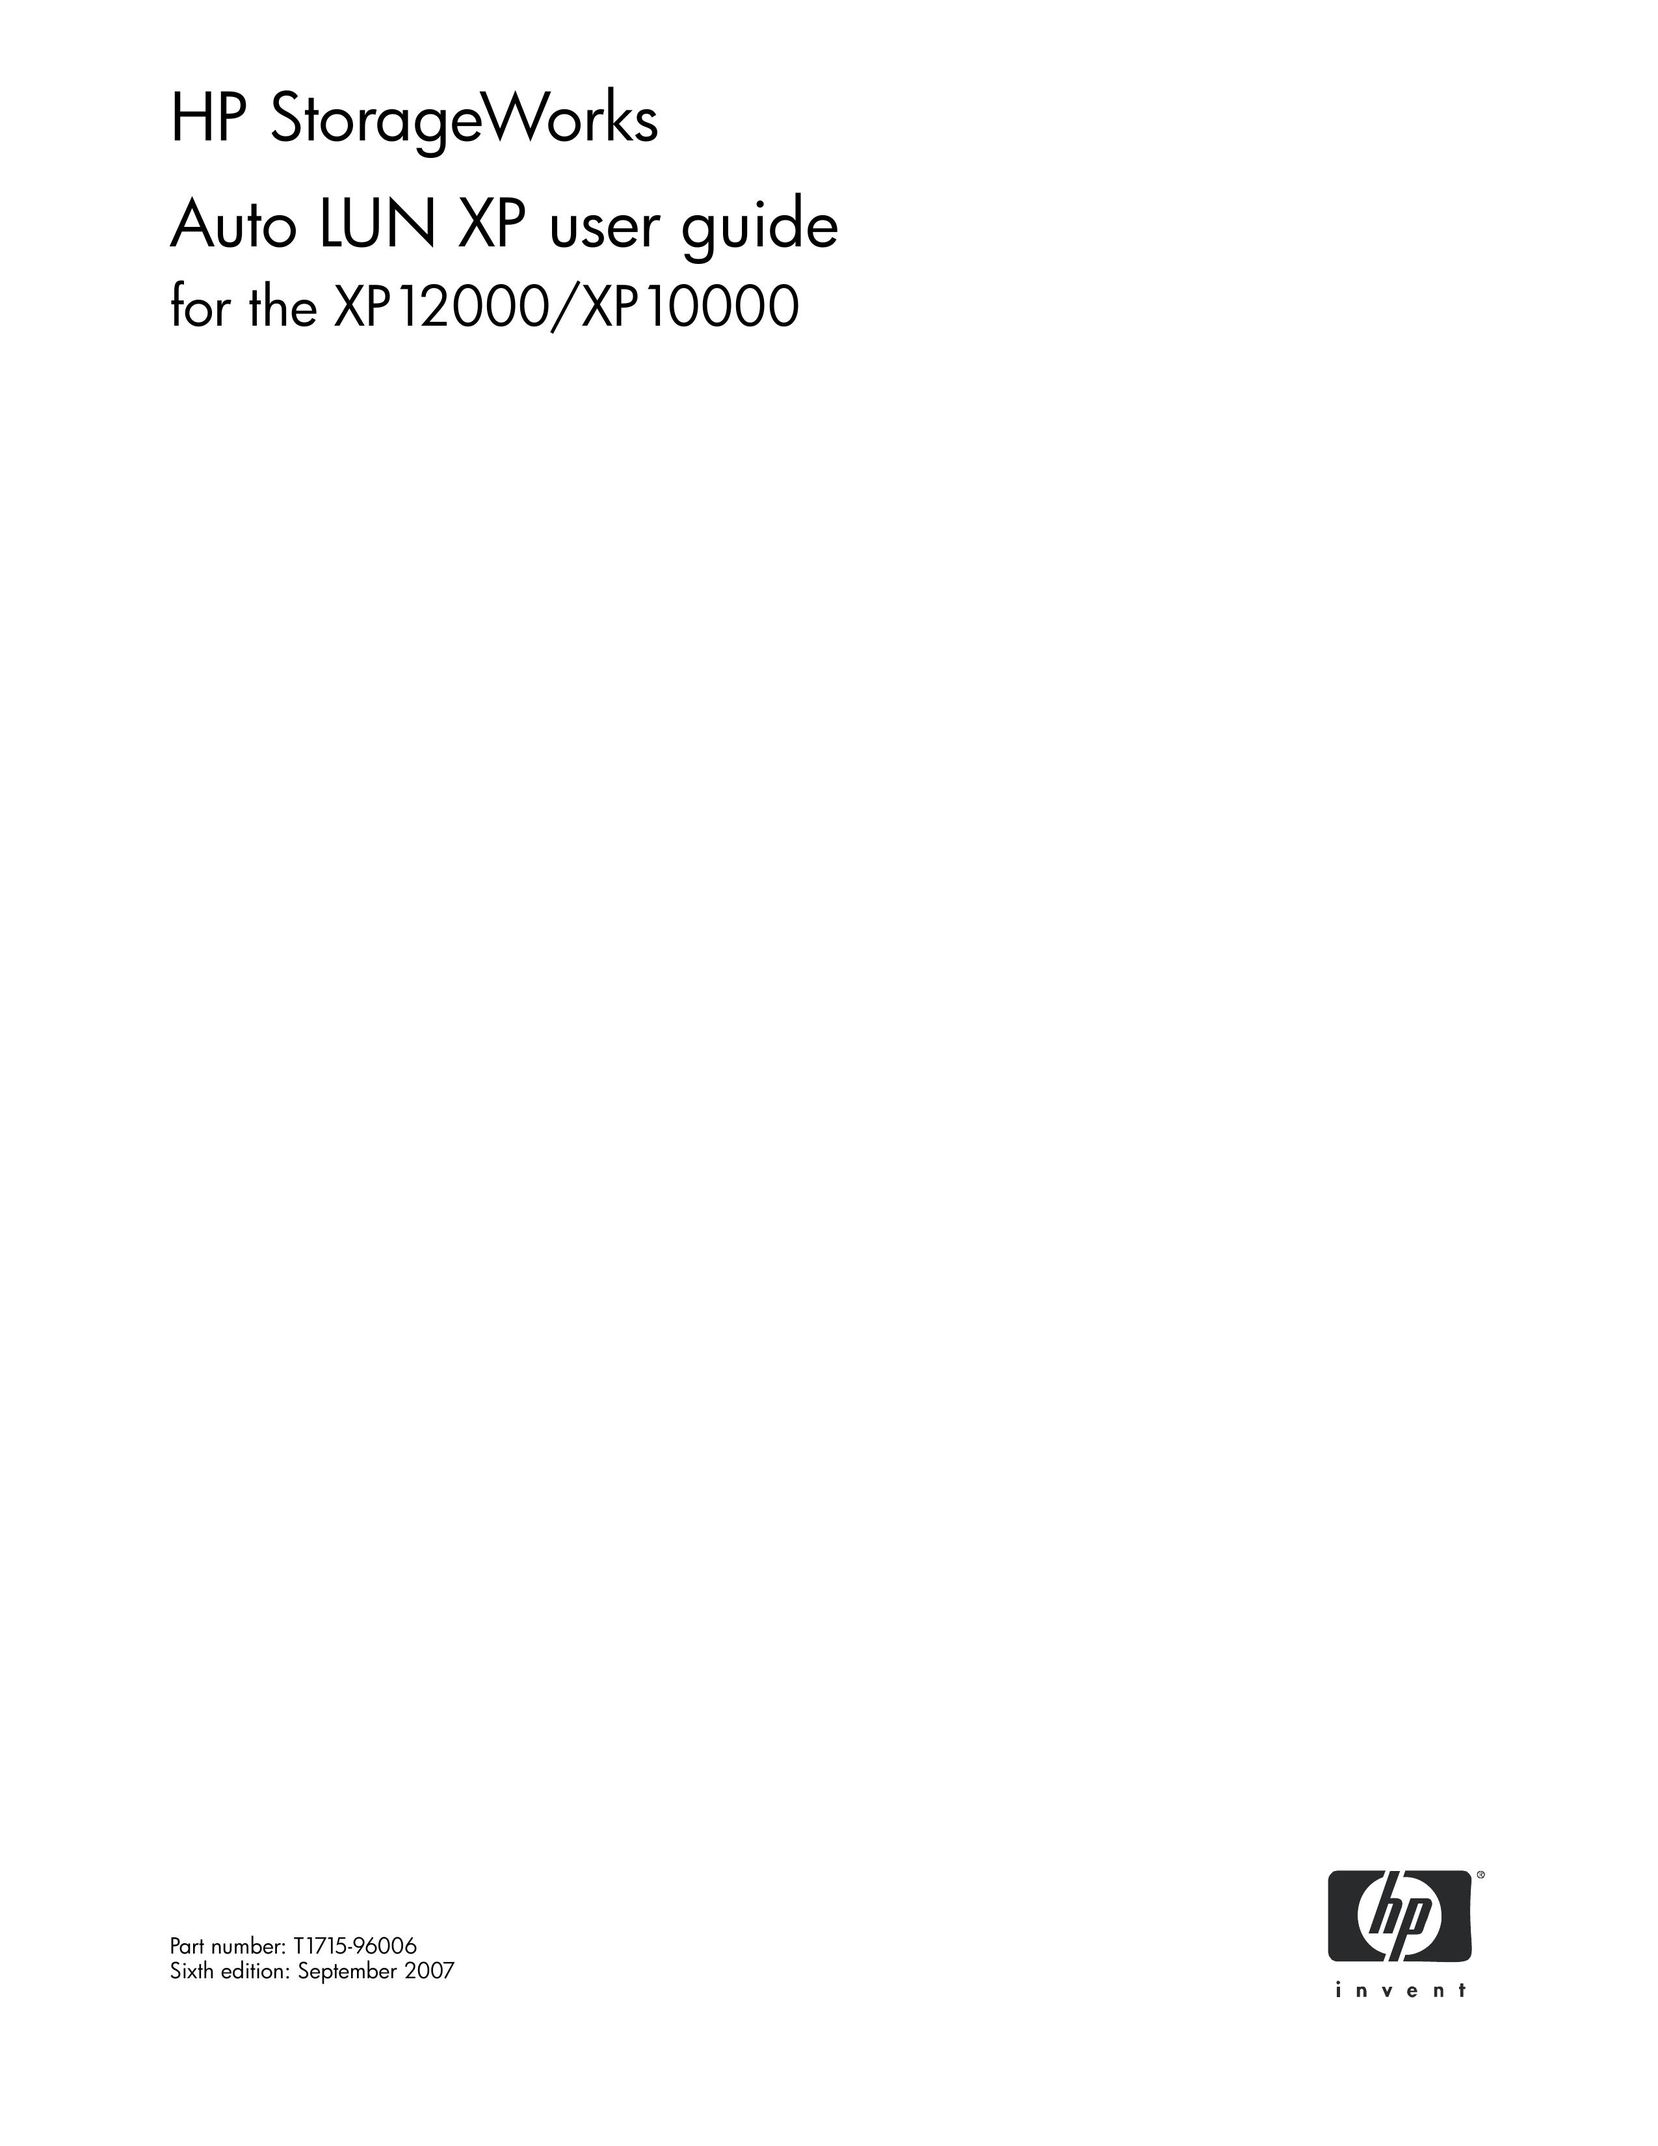 HP (Hewlett-Packard) XP10000 Portable Media Storage User Manual